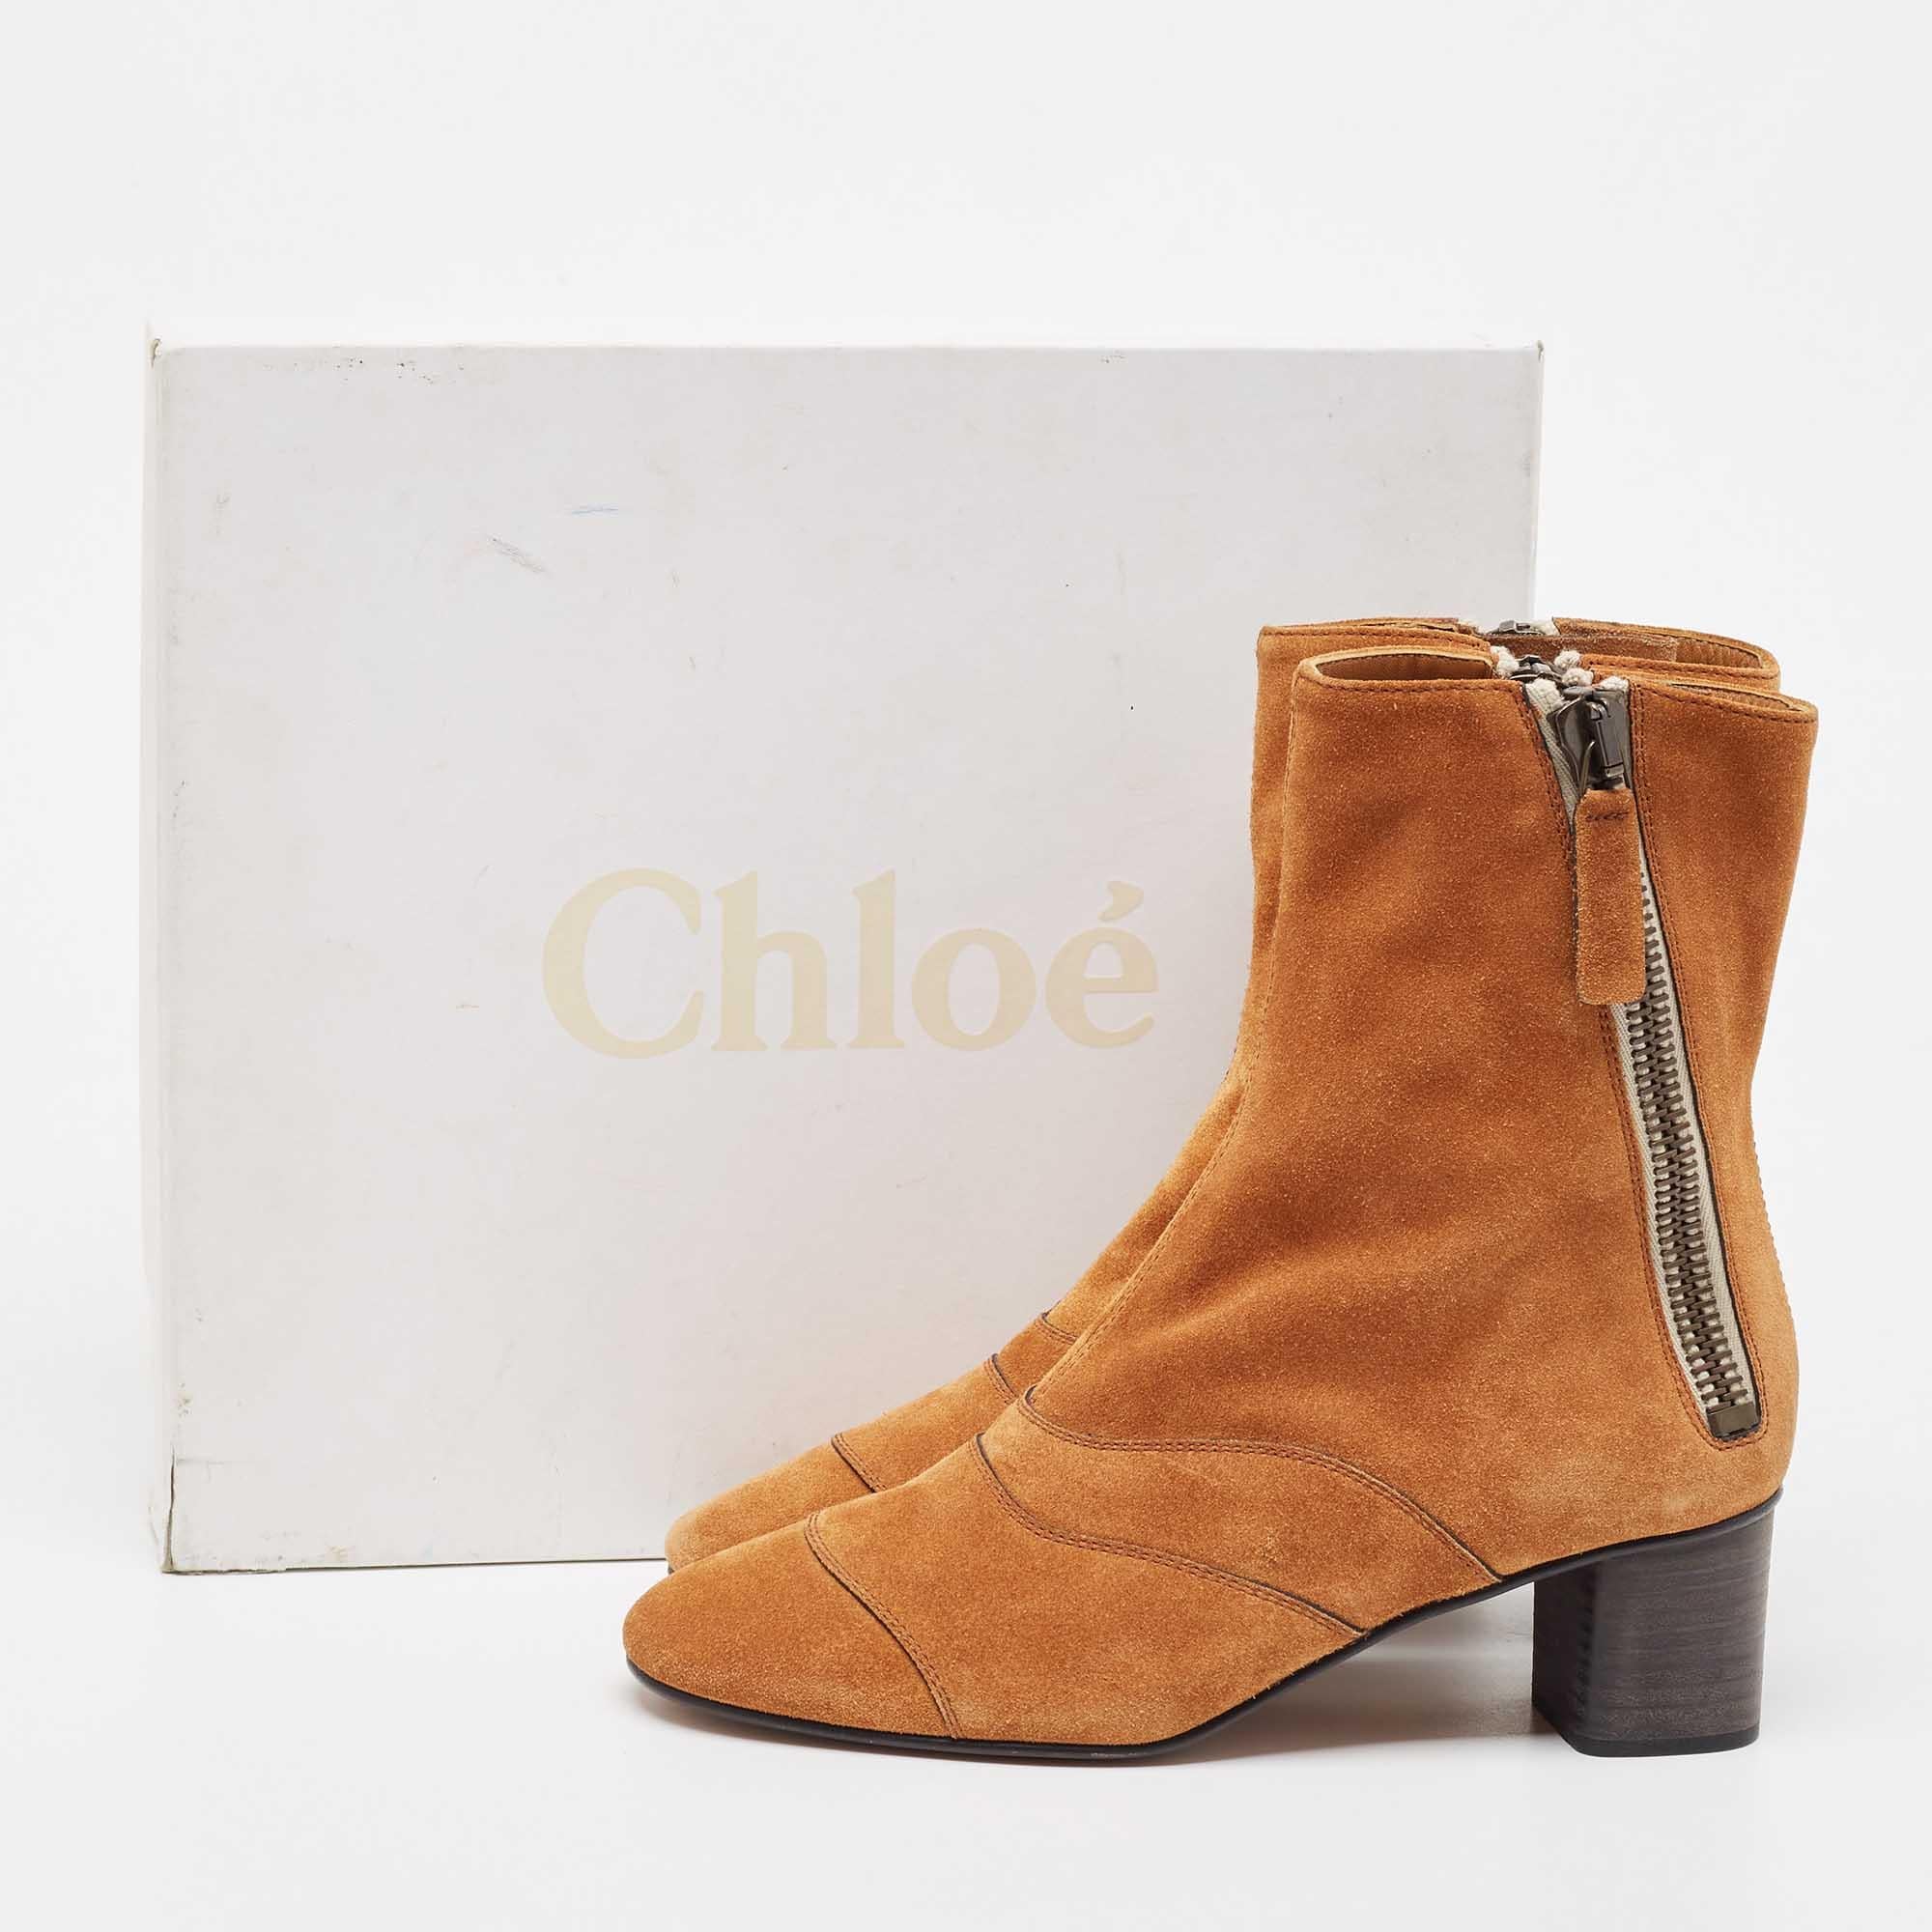 Chloe Tan Suede Block Heel Ankle Boots Size 37.5 5